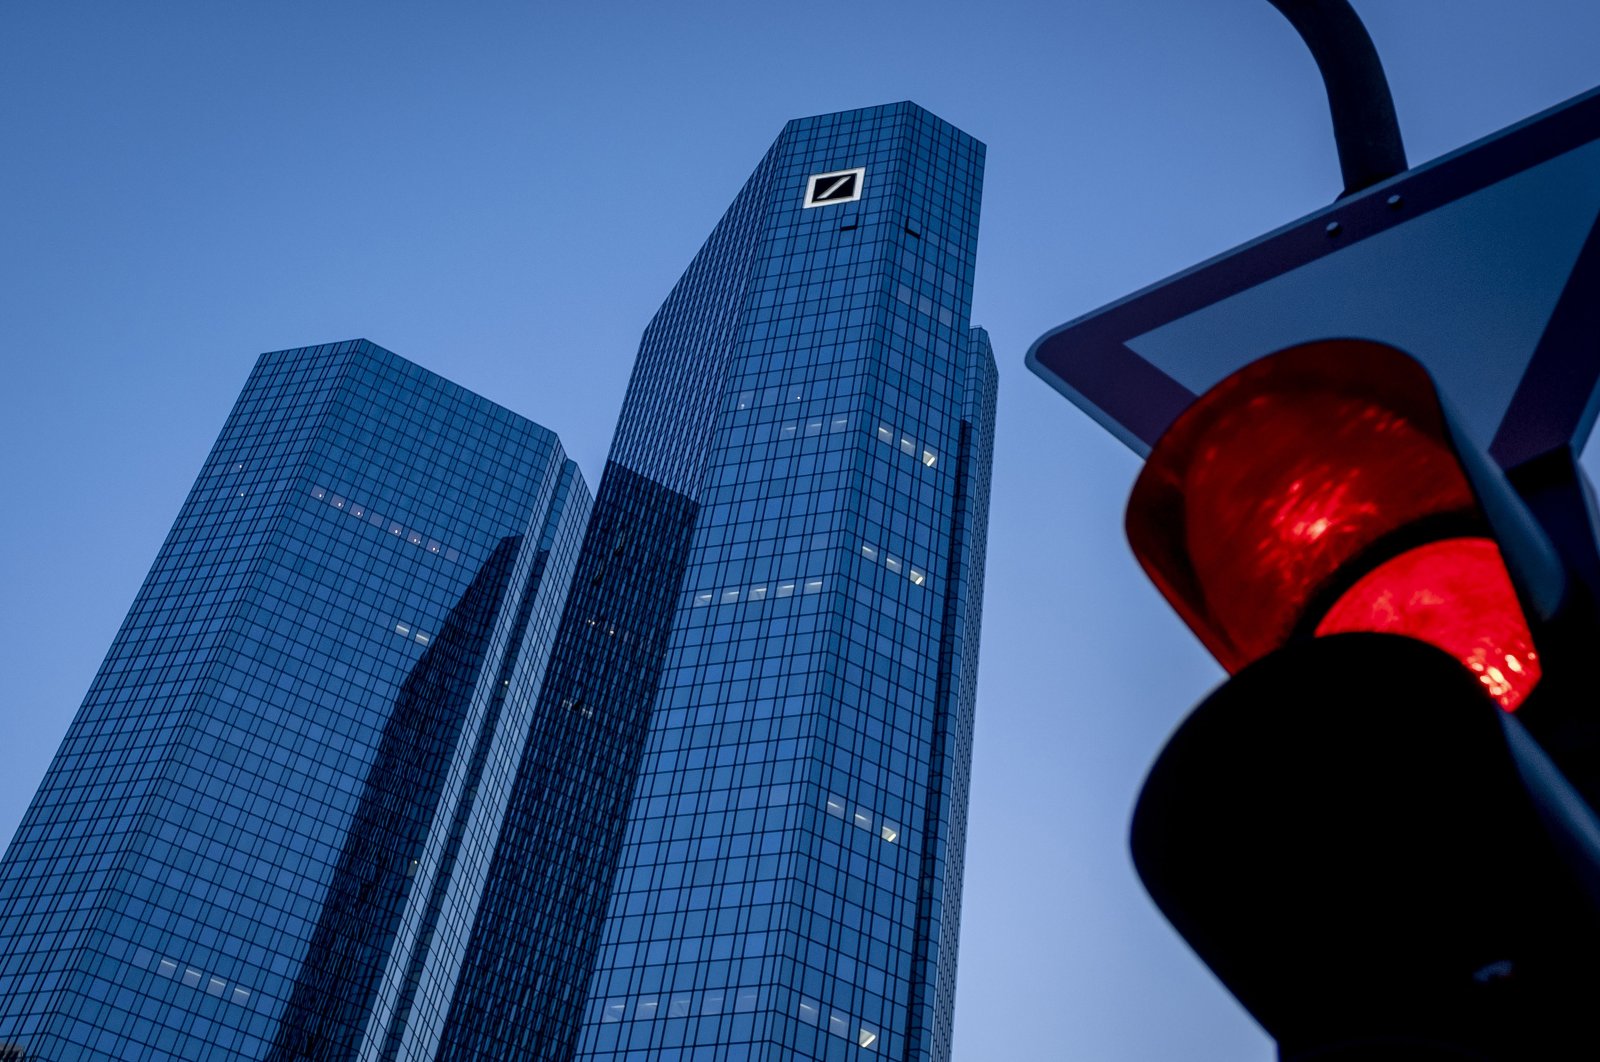 The headquarters of Deutsche Bank is seen in Frankfurt, Germany, May 18, 2020. (AP Photo)